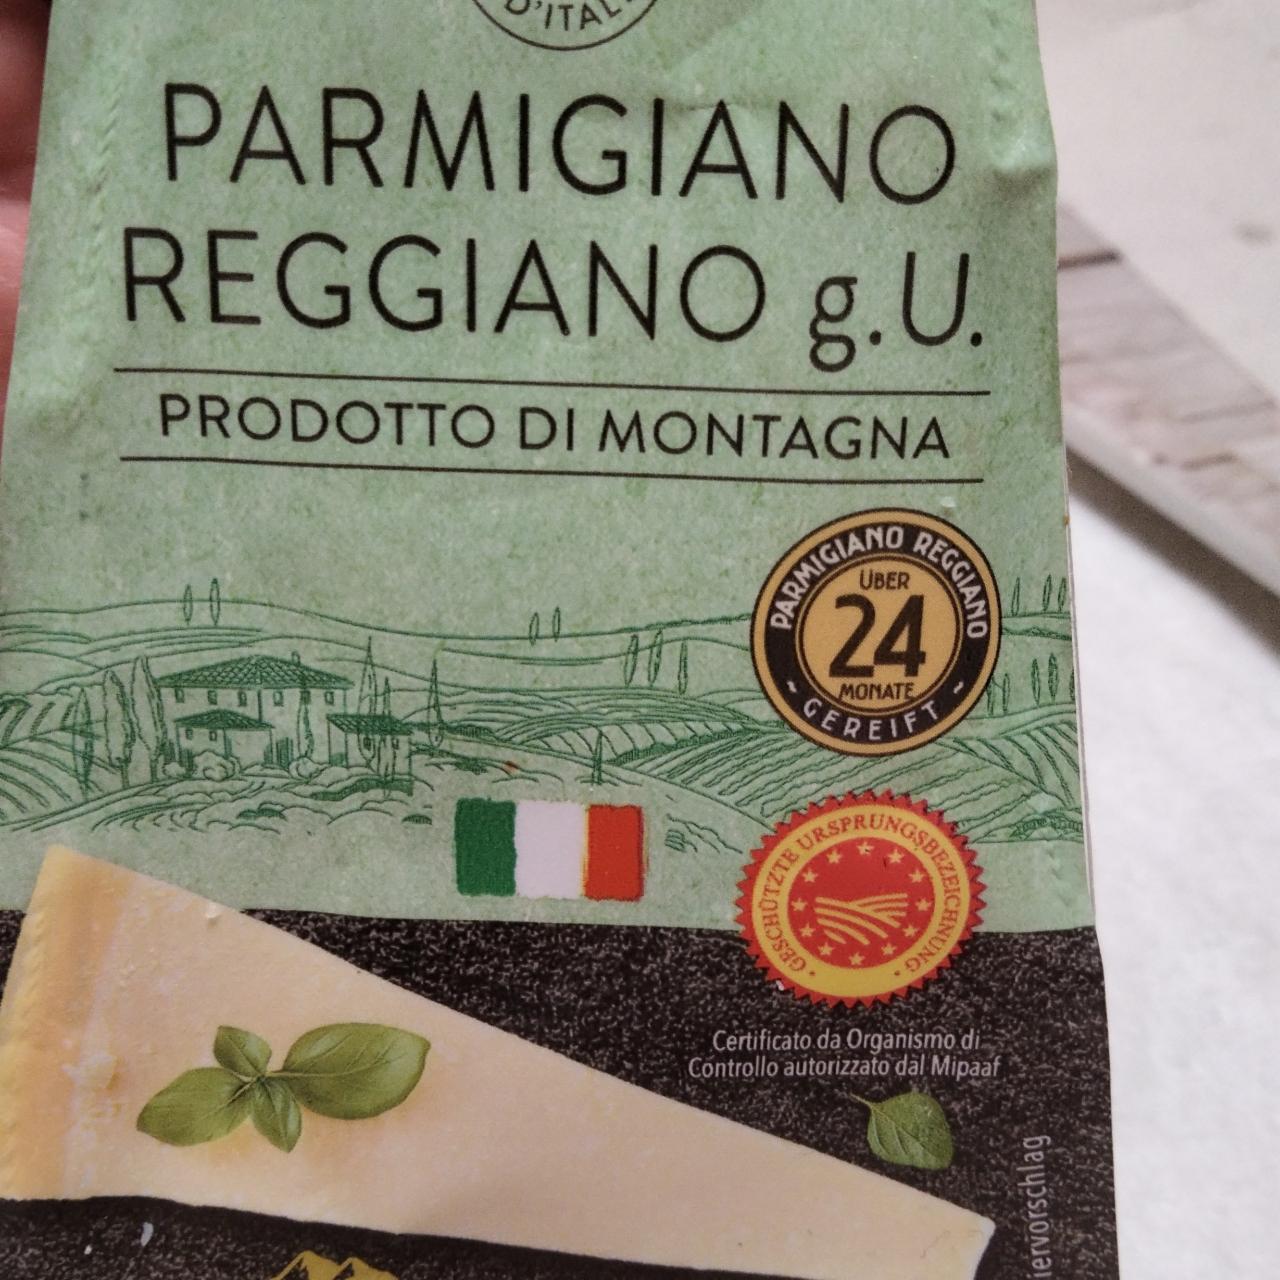 Фото - сыр пармезан Parmigiano reggiano EDEKA